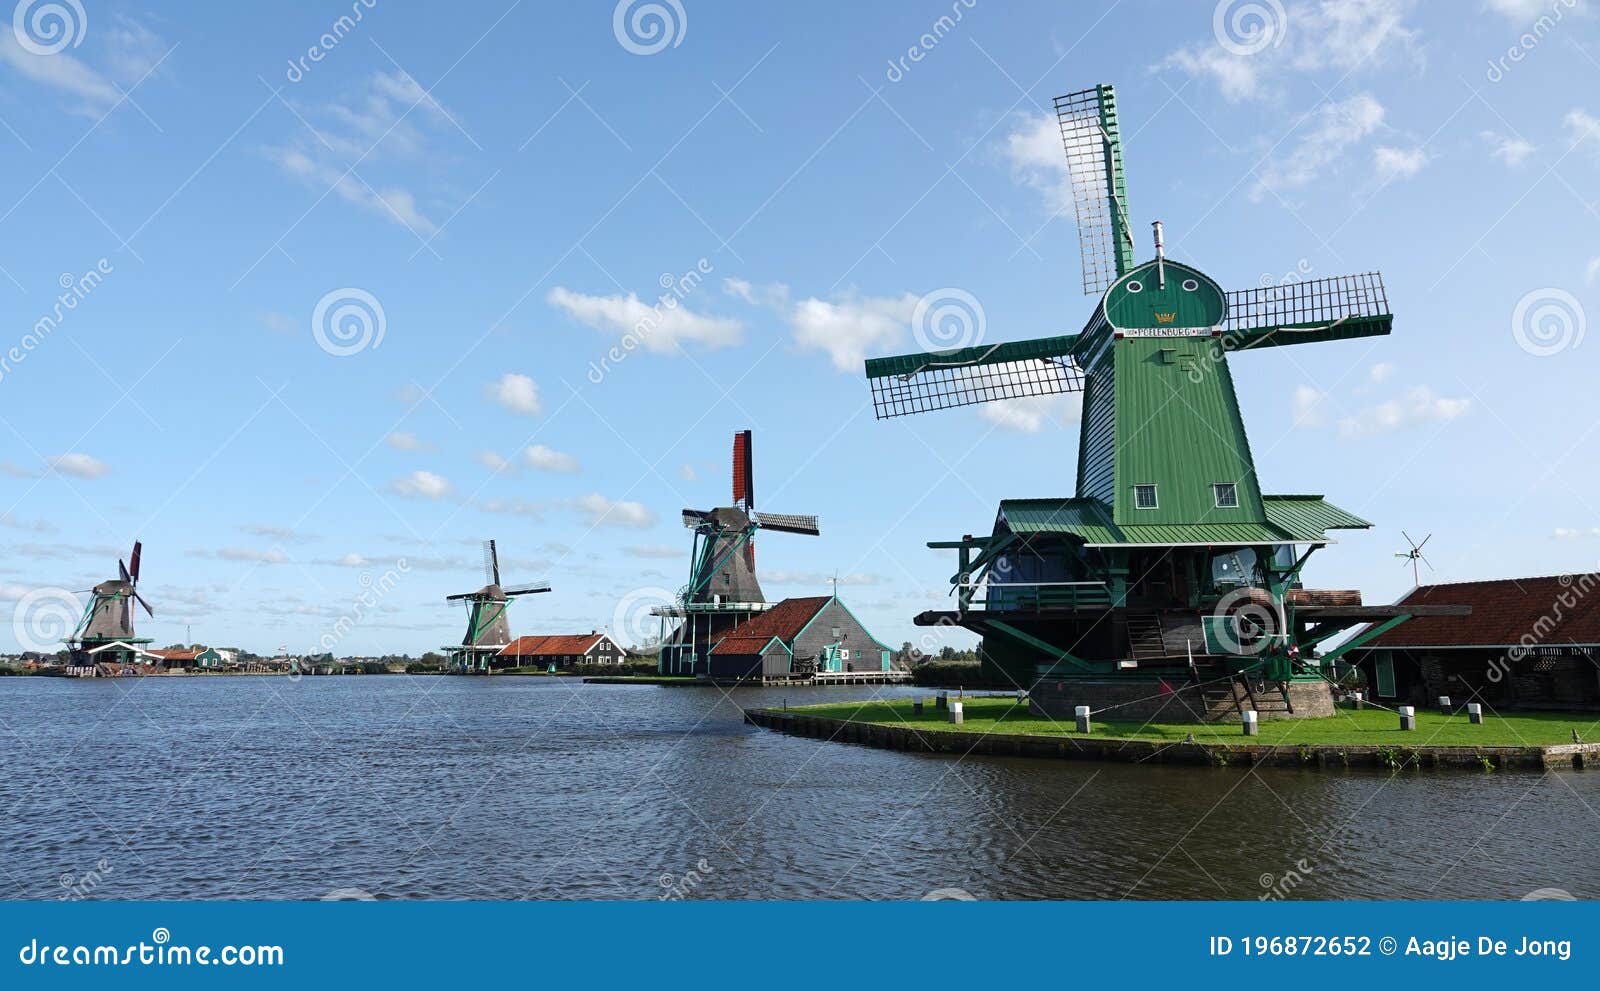 dutch windmills on the zaan river at the zaanse schans in zaandam, the netherlands